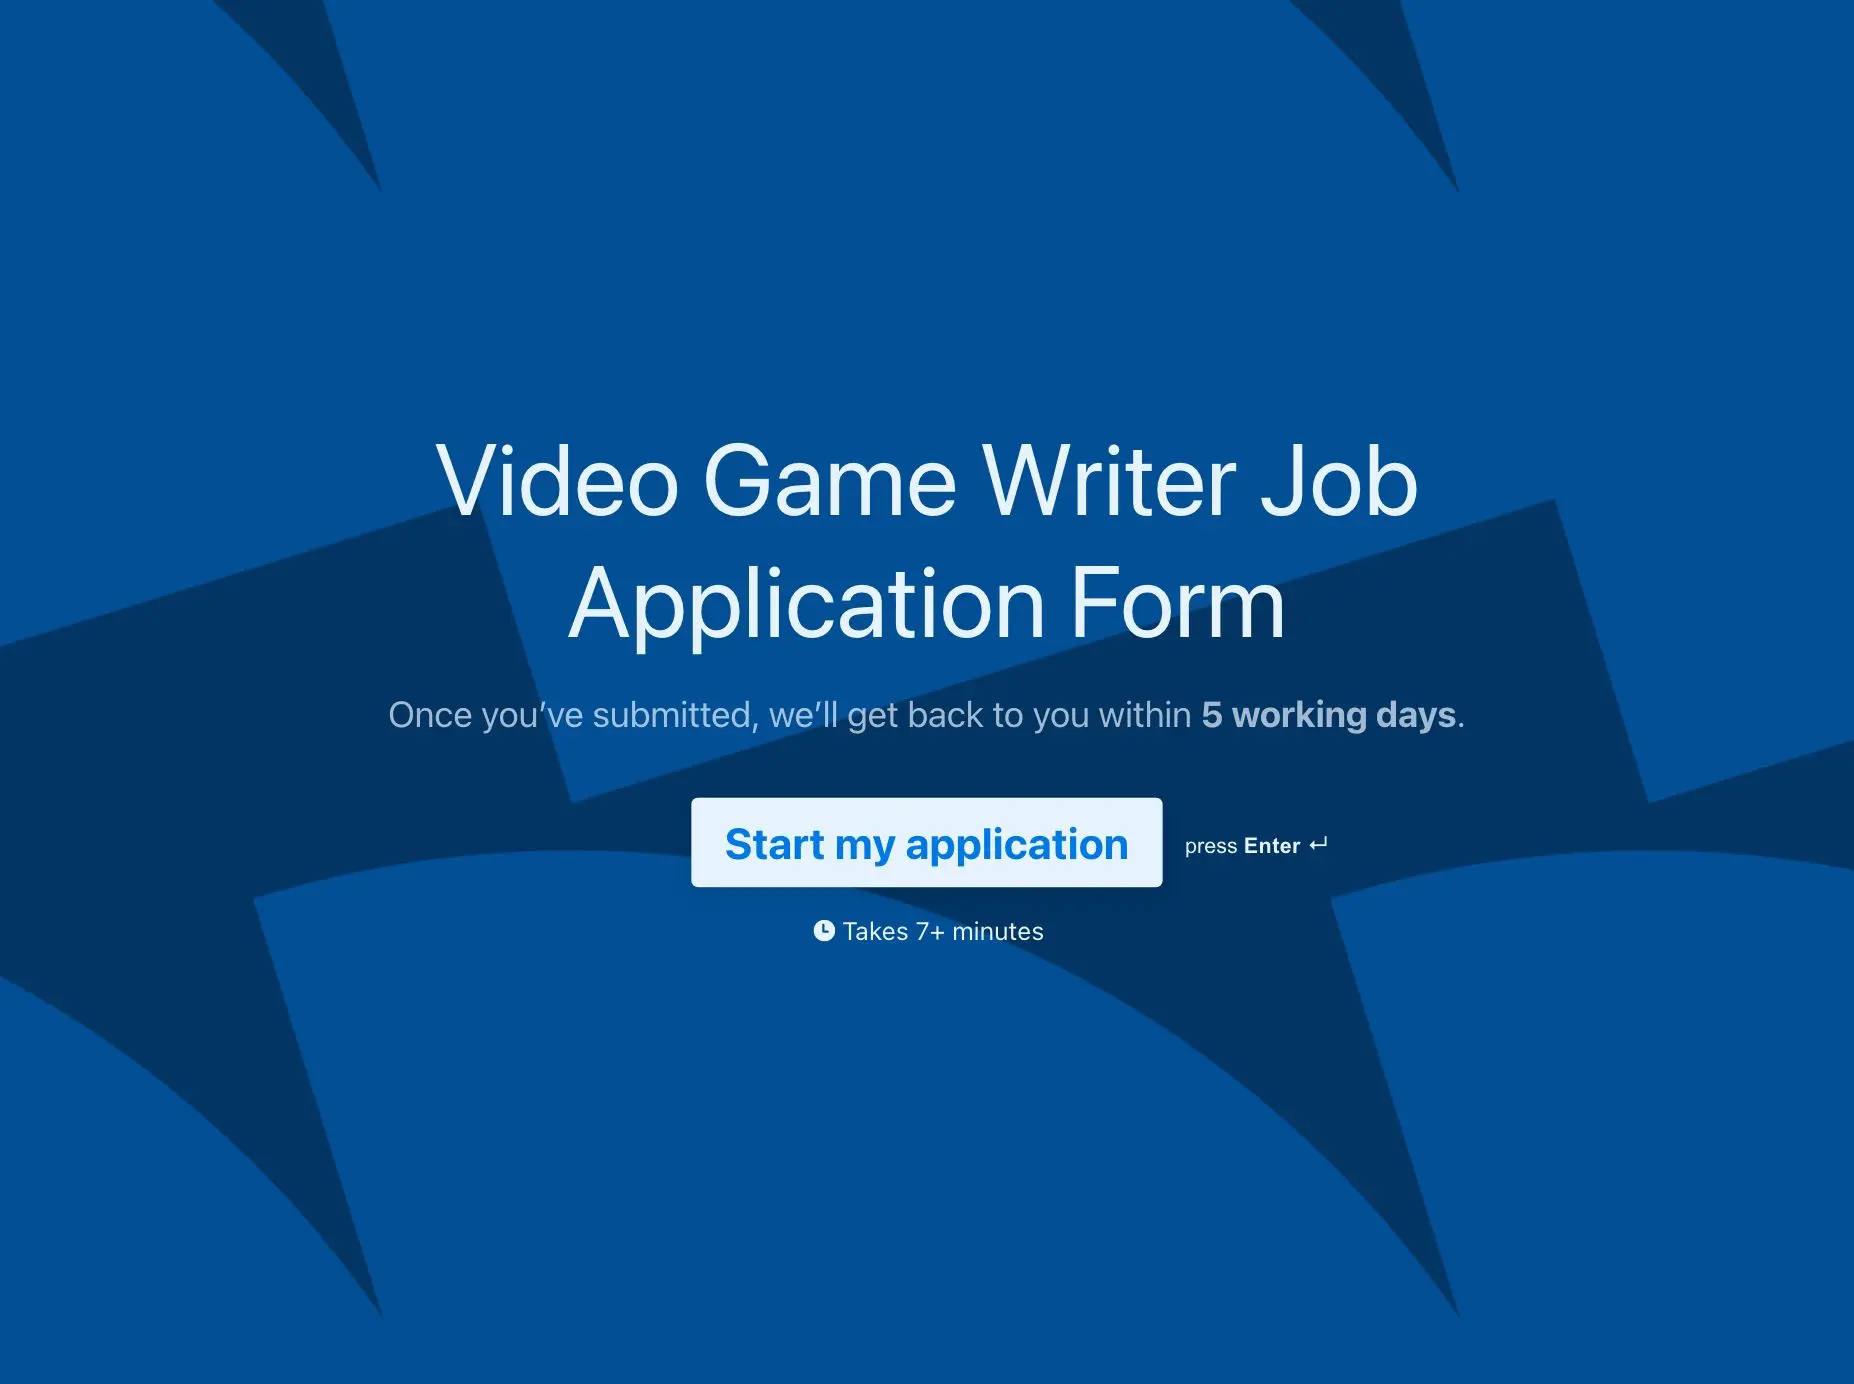 Video Game Writer Job Application Form Template Hero